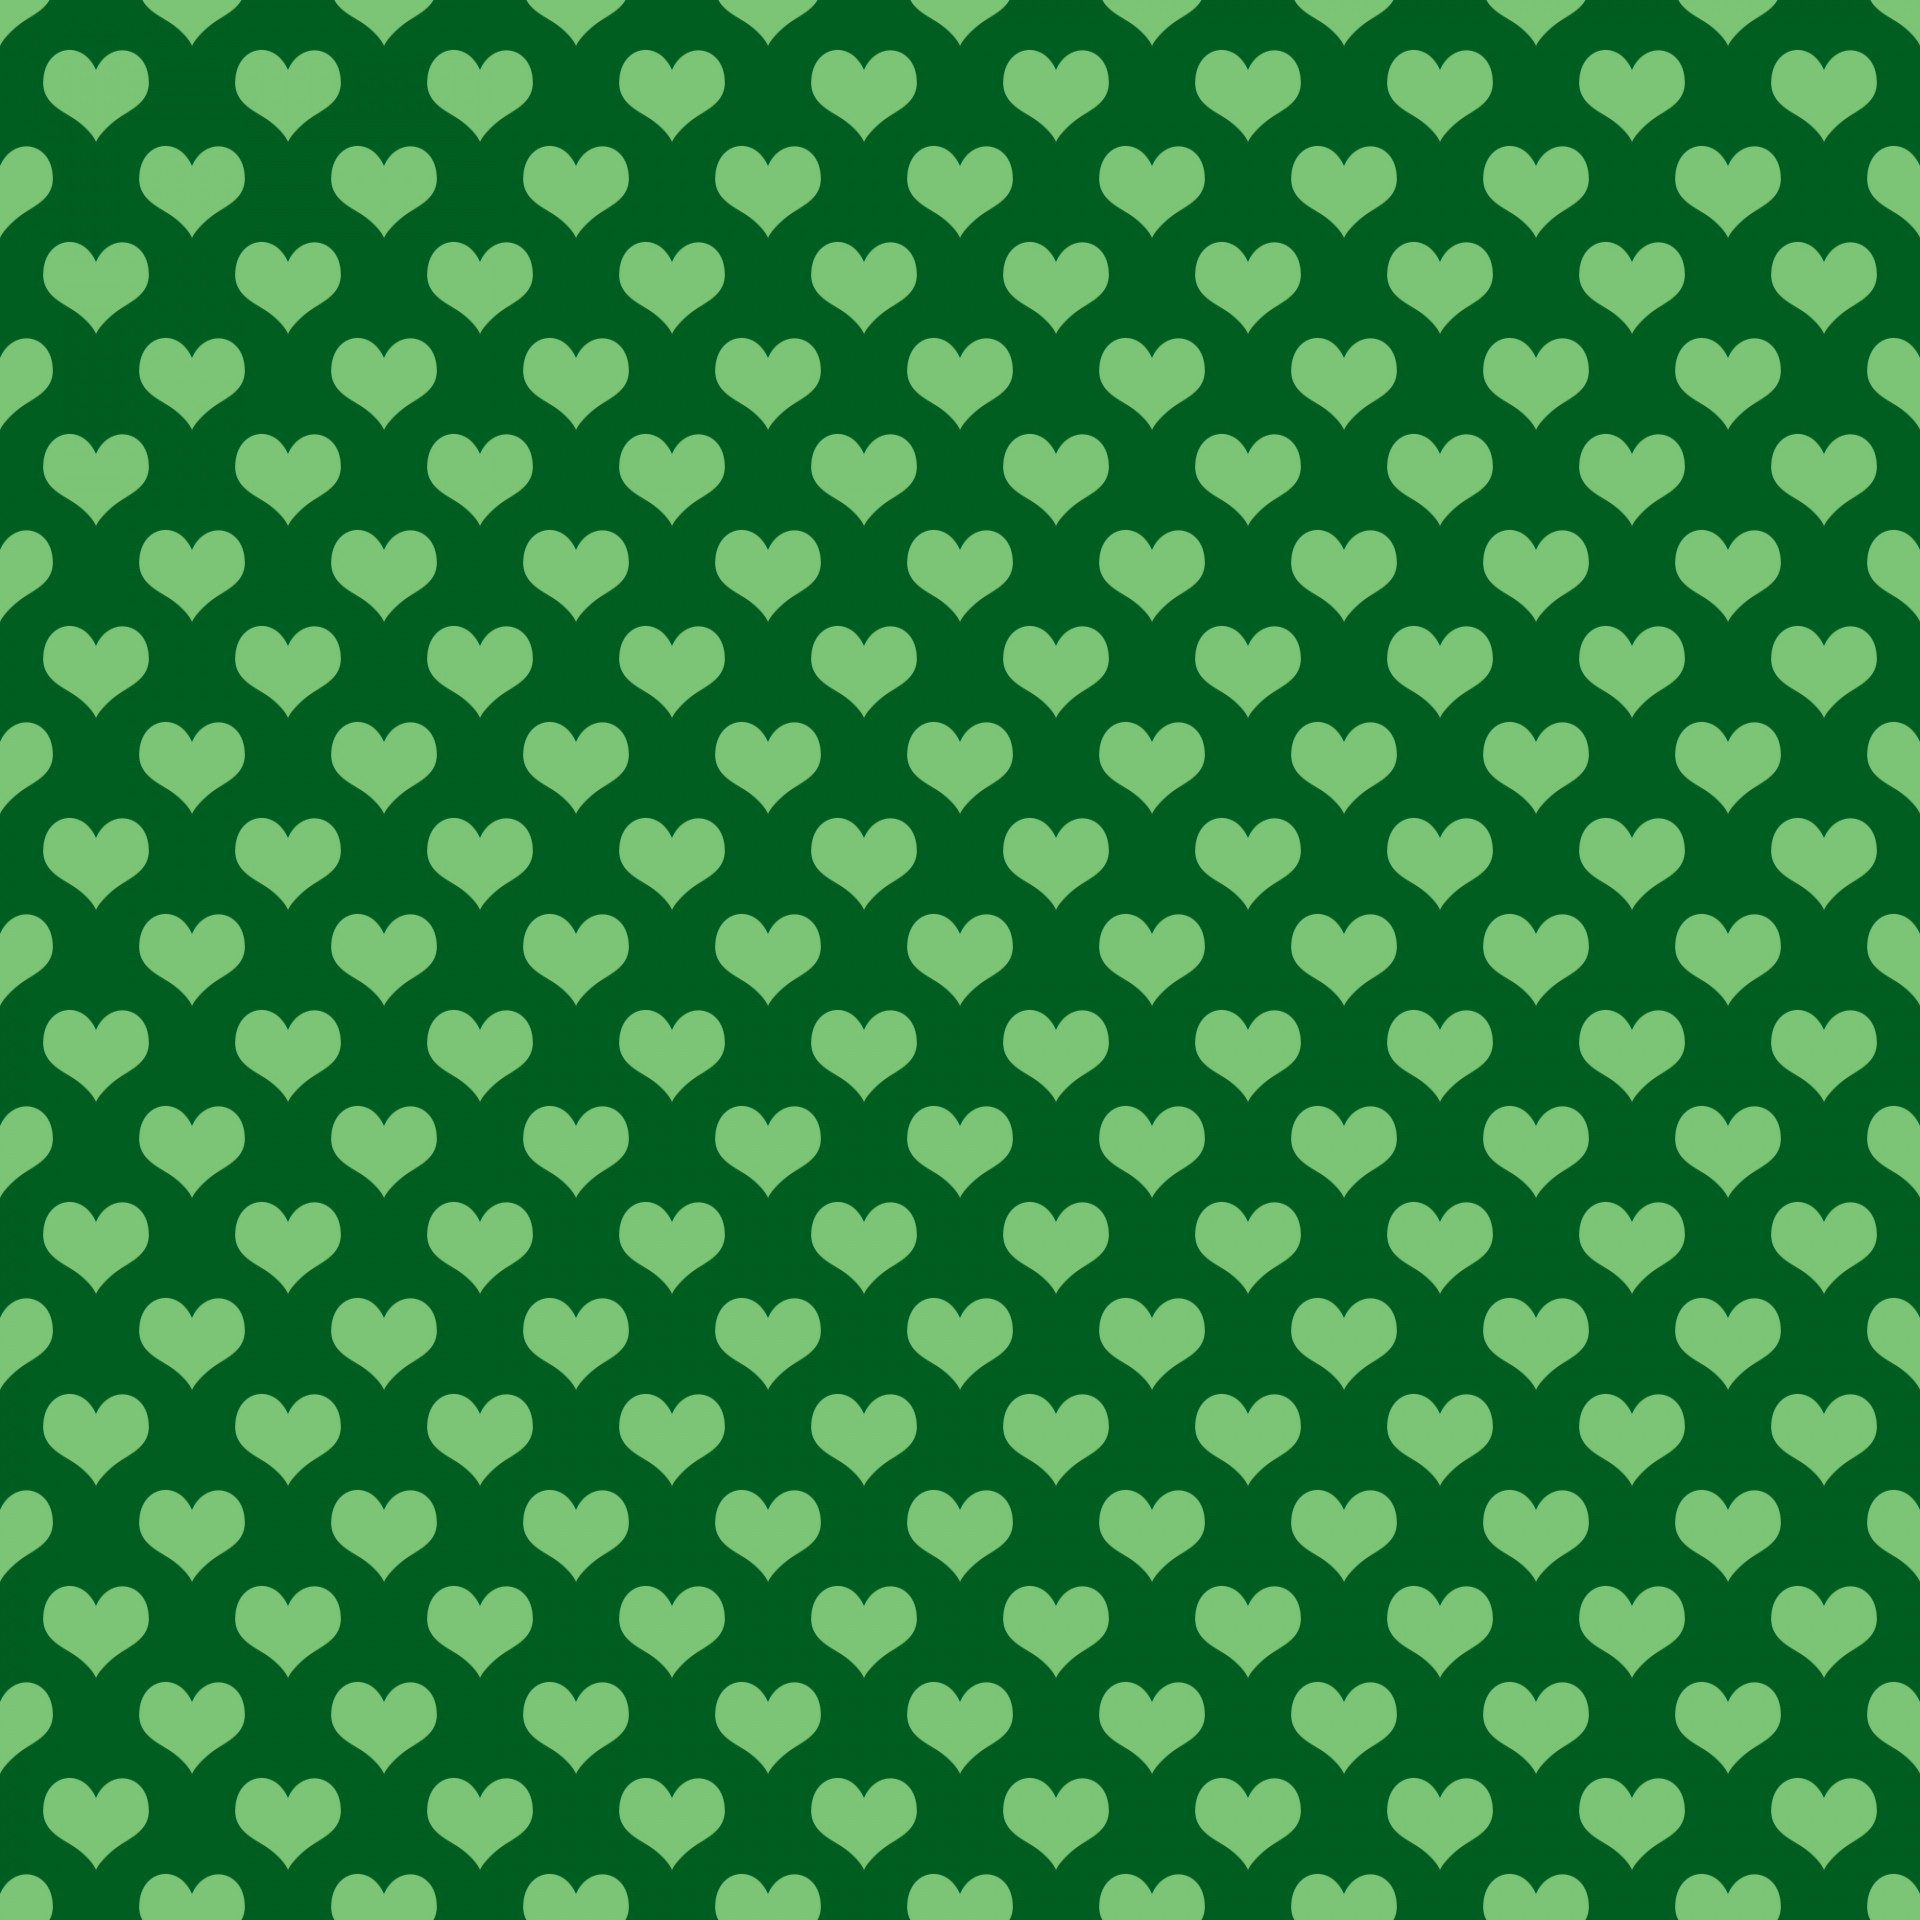 1920x1920 Hearts Background Wallpaper Green